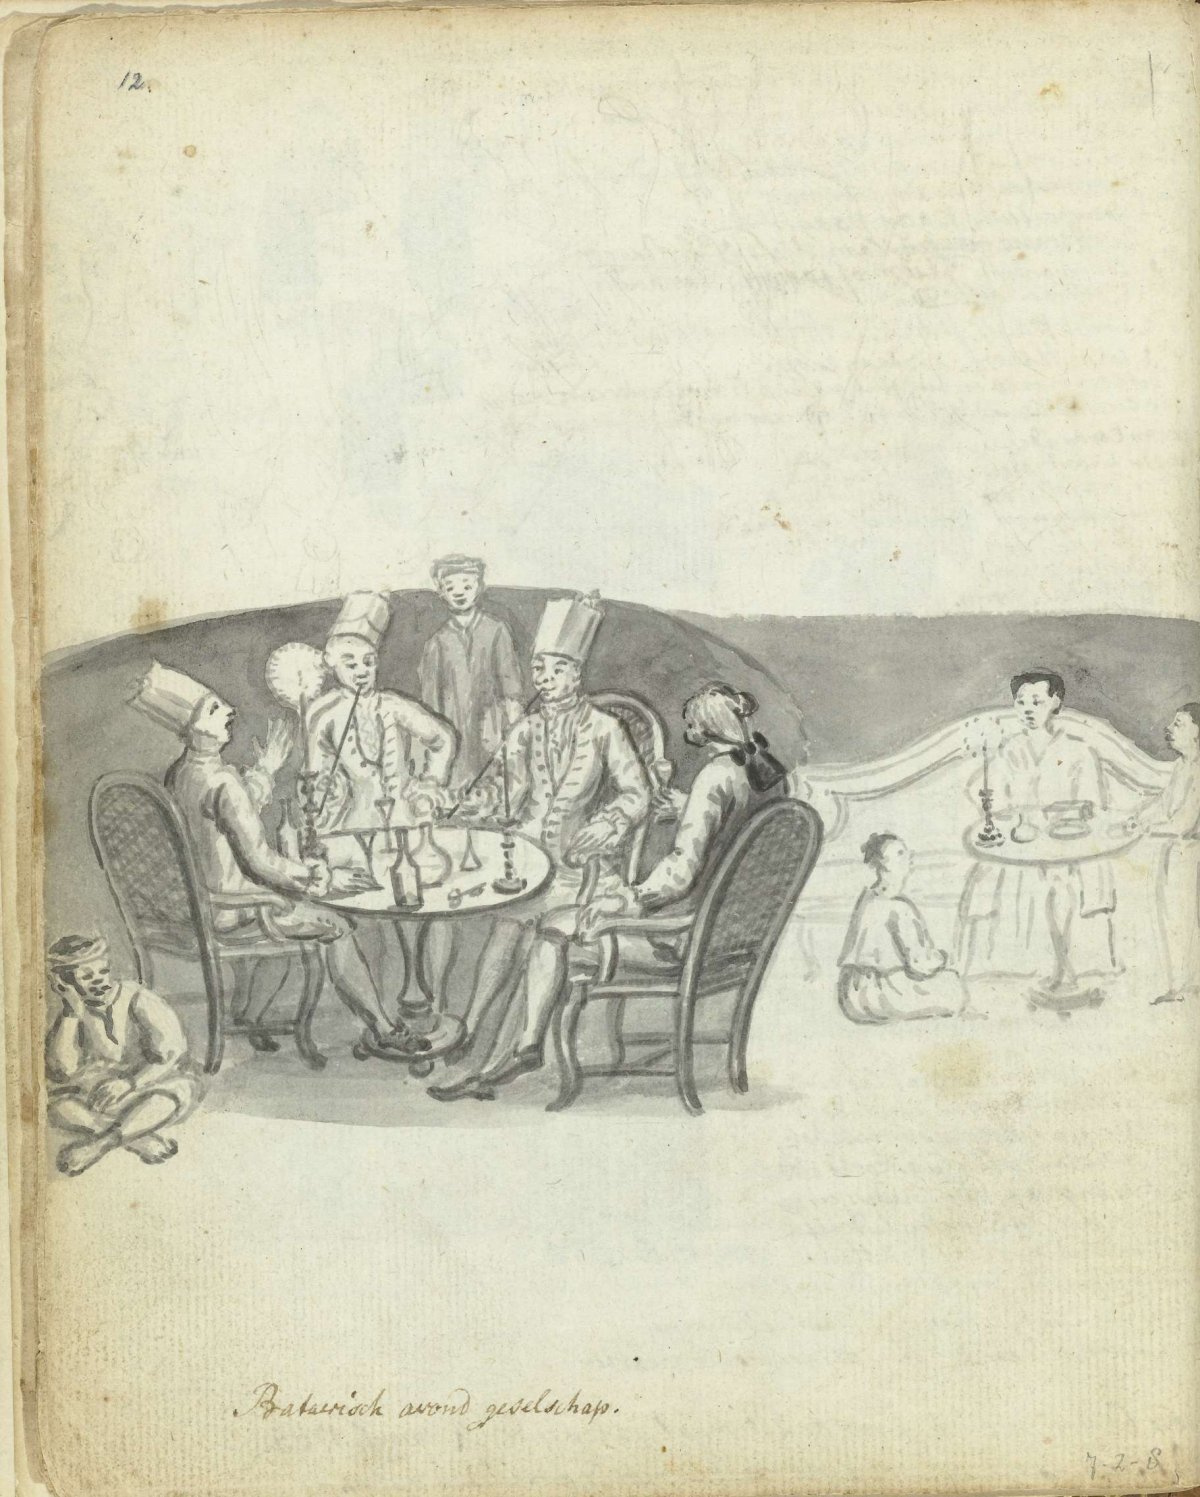 Batavisch avondgezelschap, Jan Brandes, 1779 - 1785